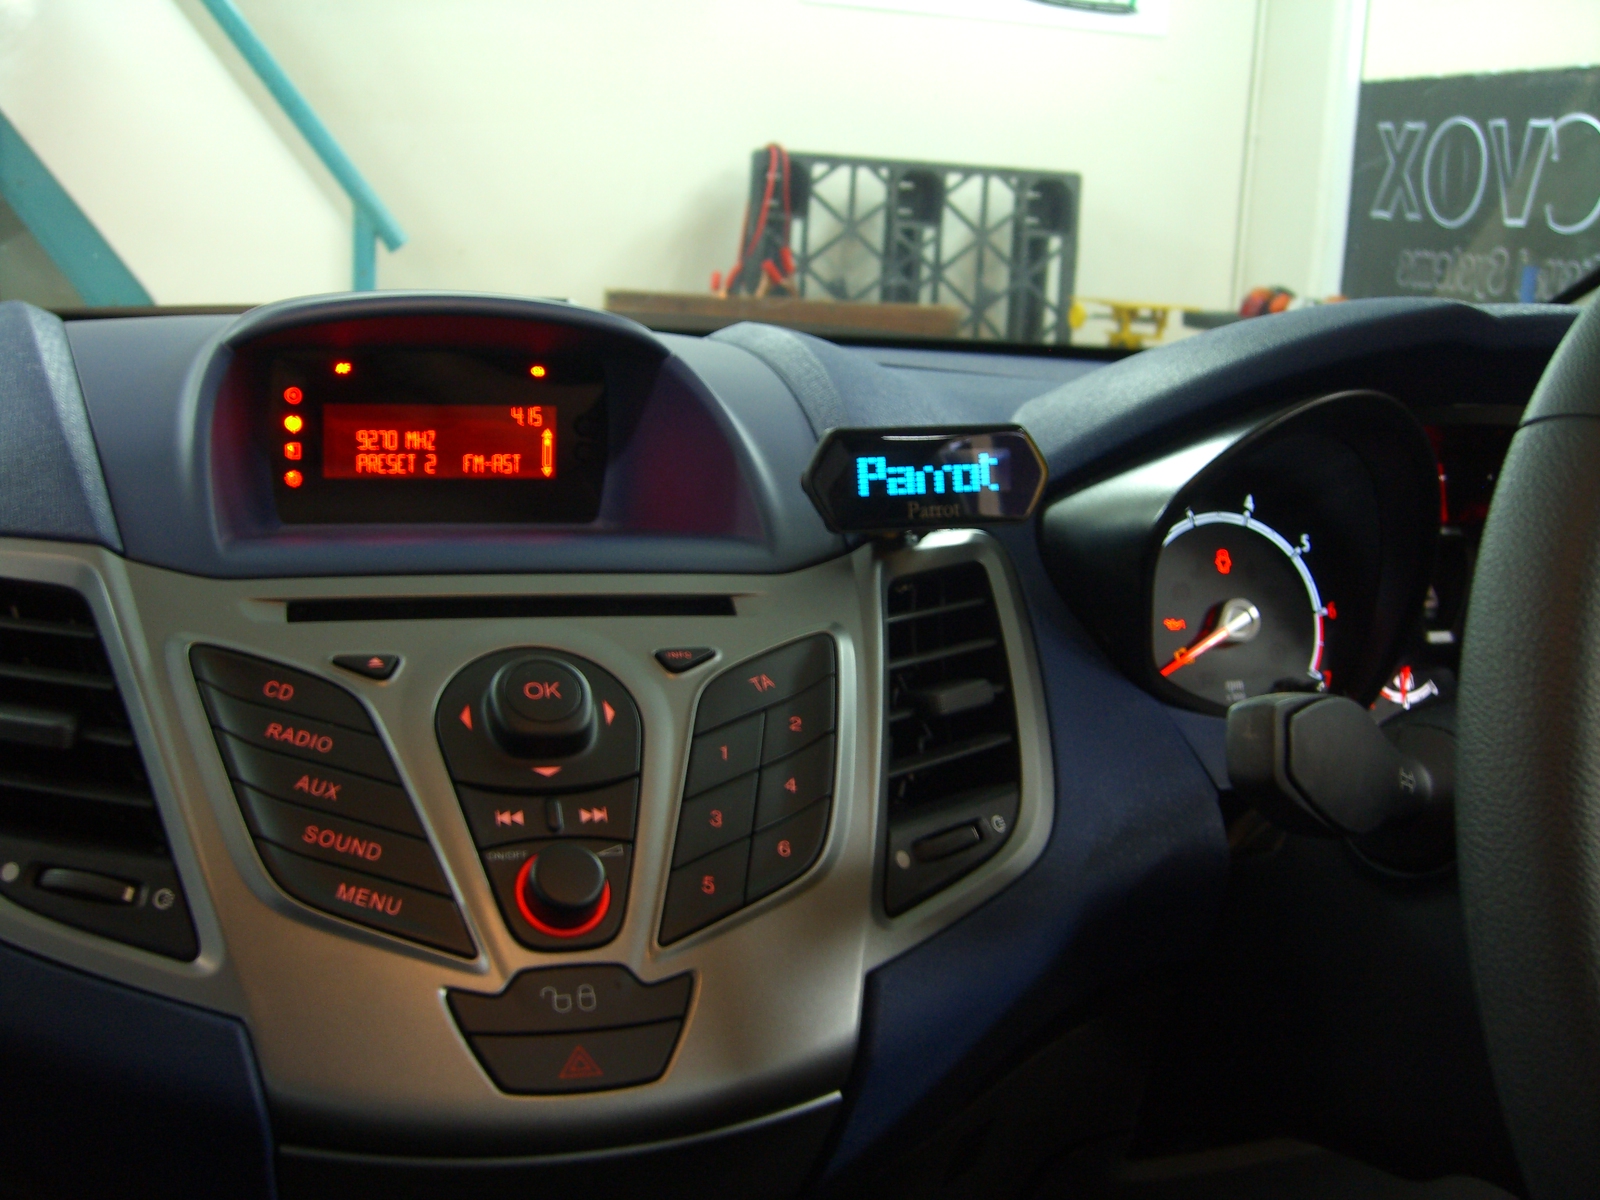 Ford Fiesta 2009 Parrot Bluetooth Handsfree, iPod USB & AUX – Maroochy Car Sound